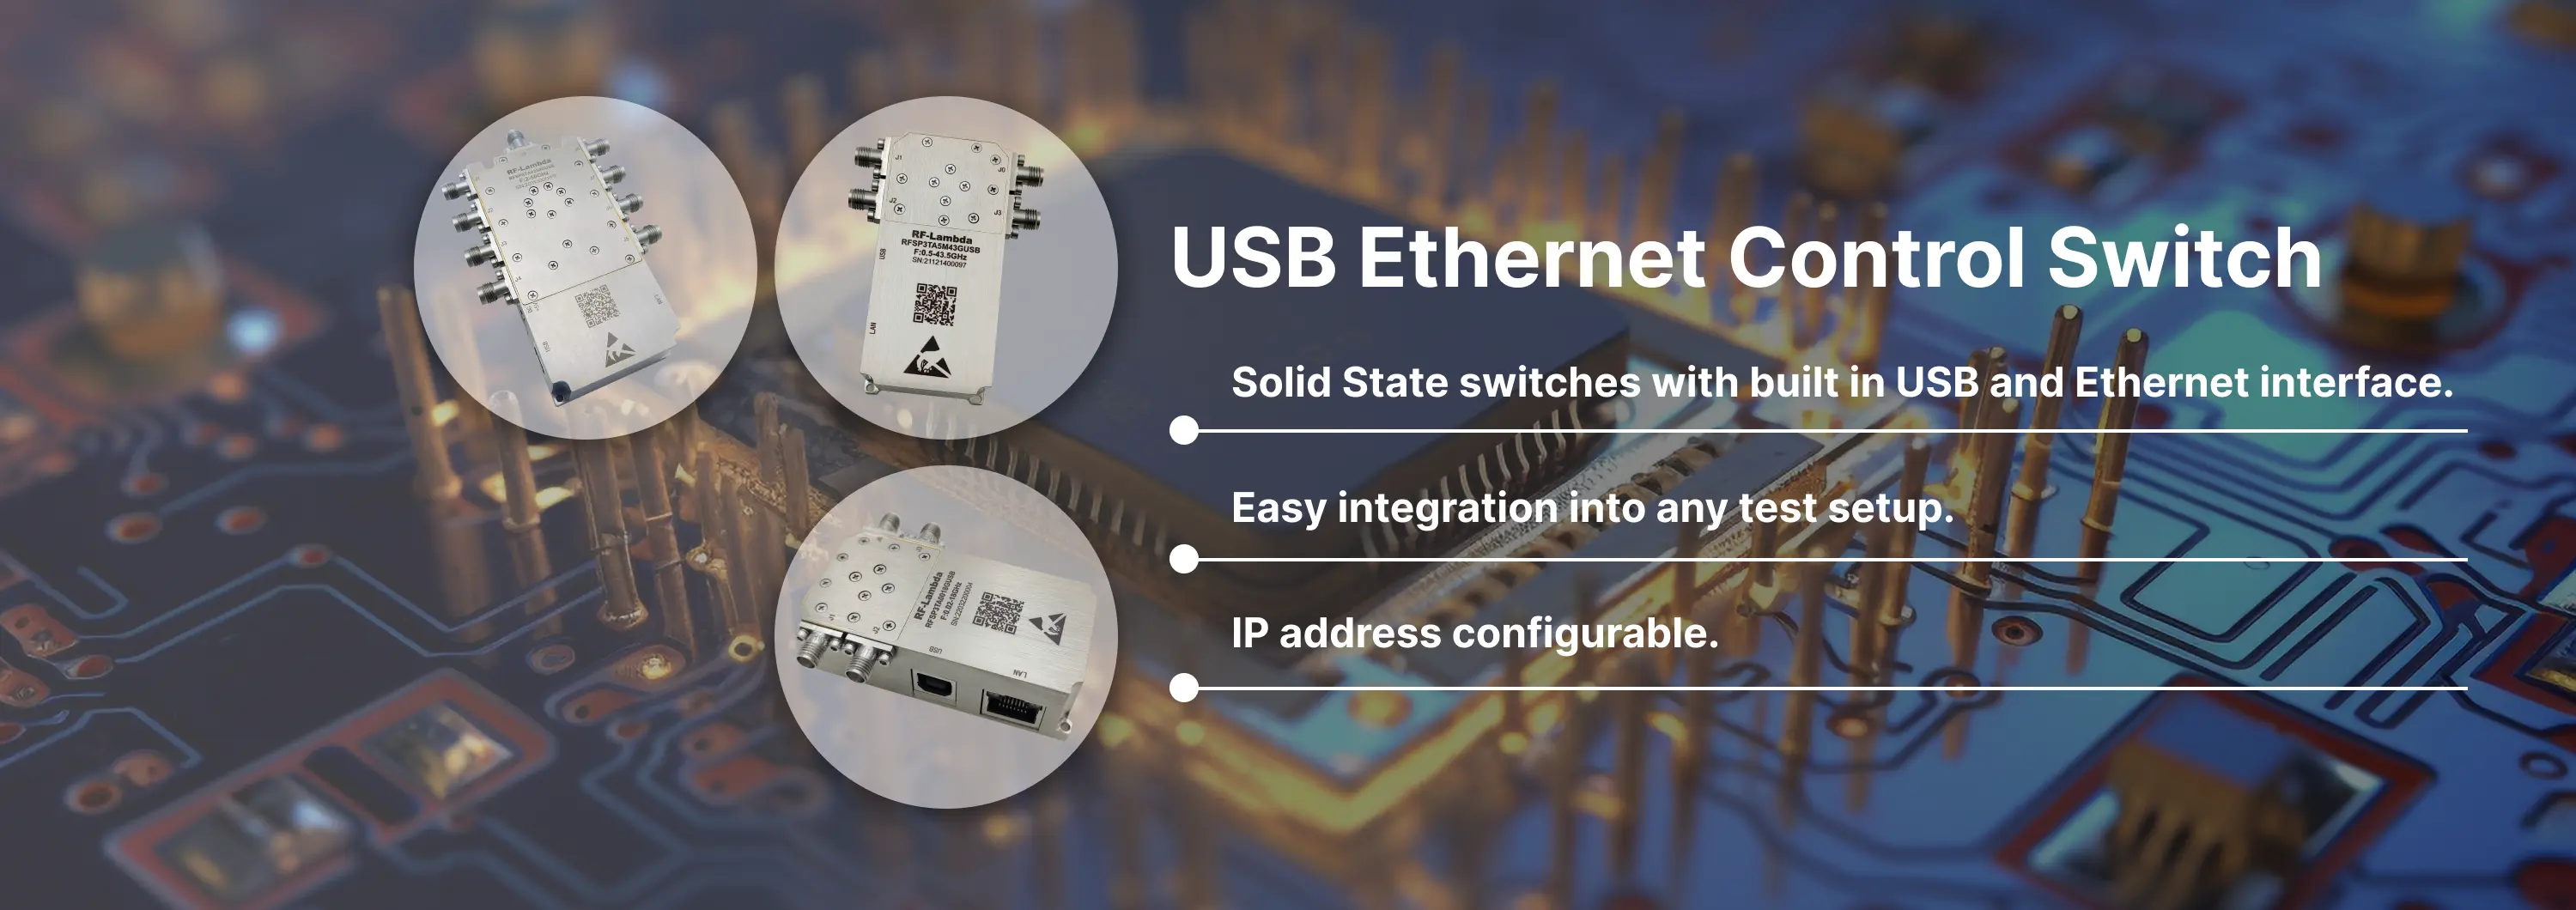 USB/Ethernet Control RF Switch Banner